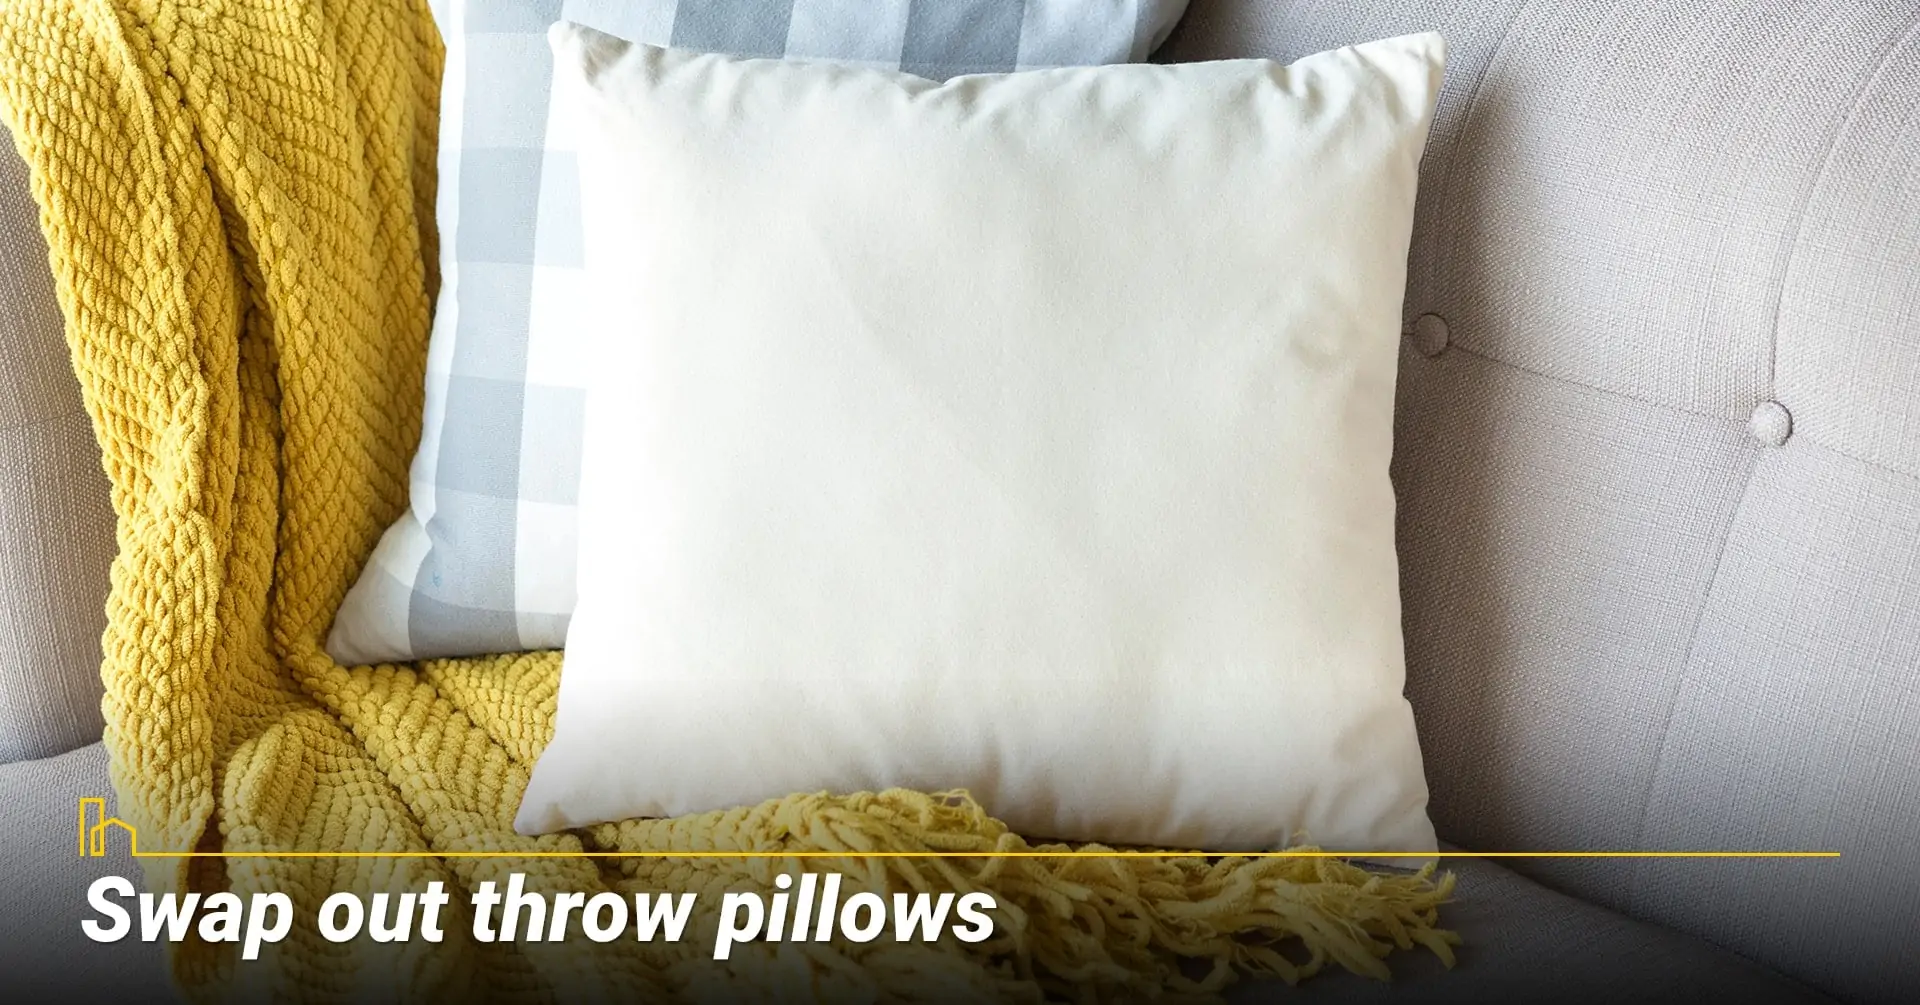 Swap out throw pillows, upgrade throws and pillows